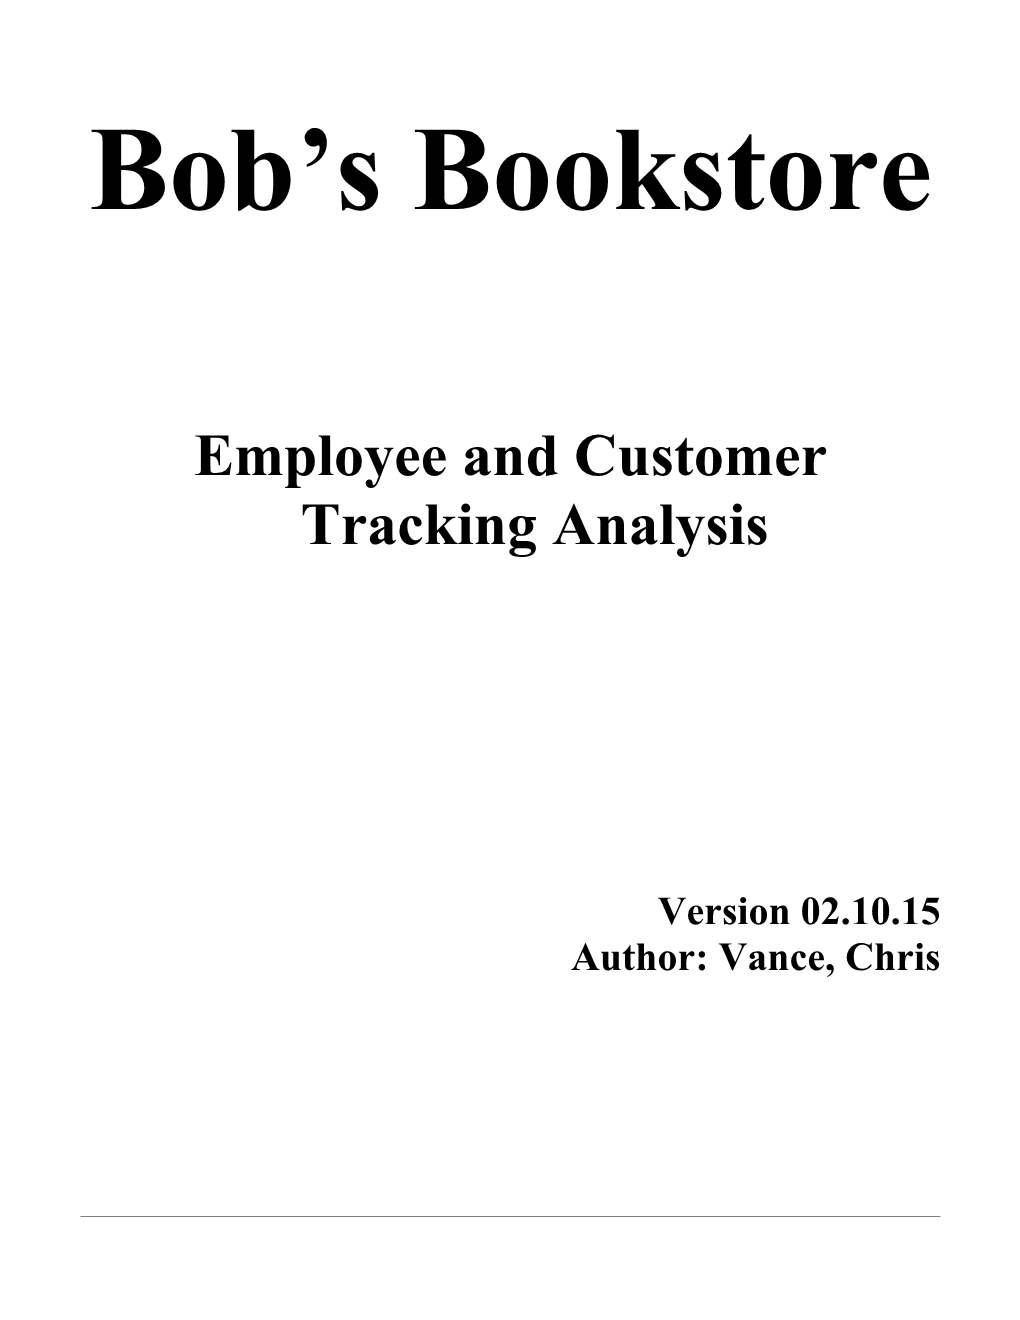 Employee and Customer Tracking Analysis